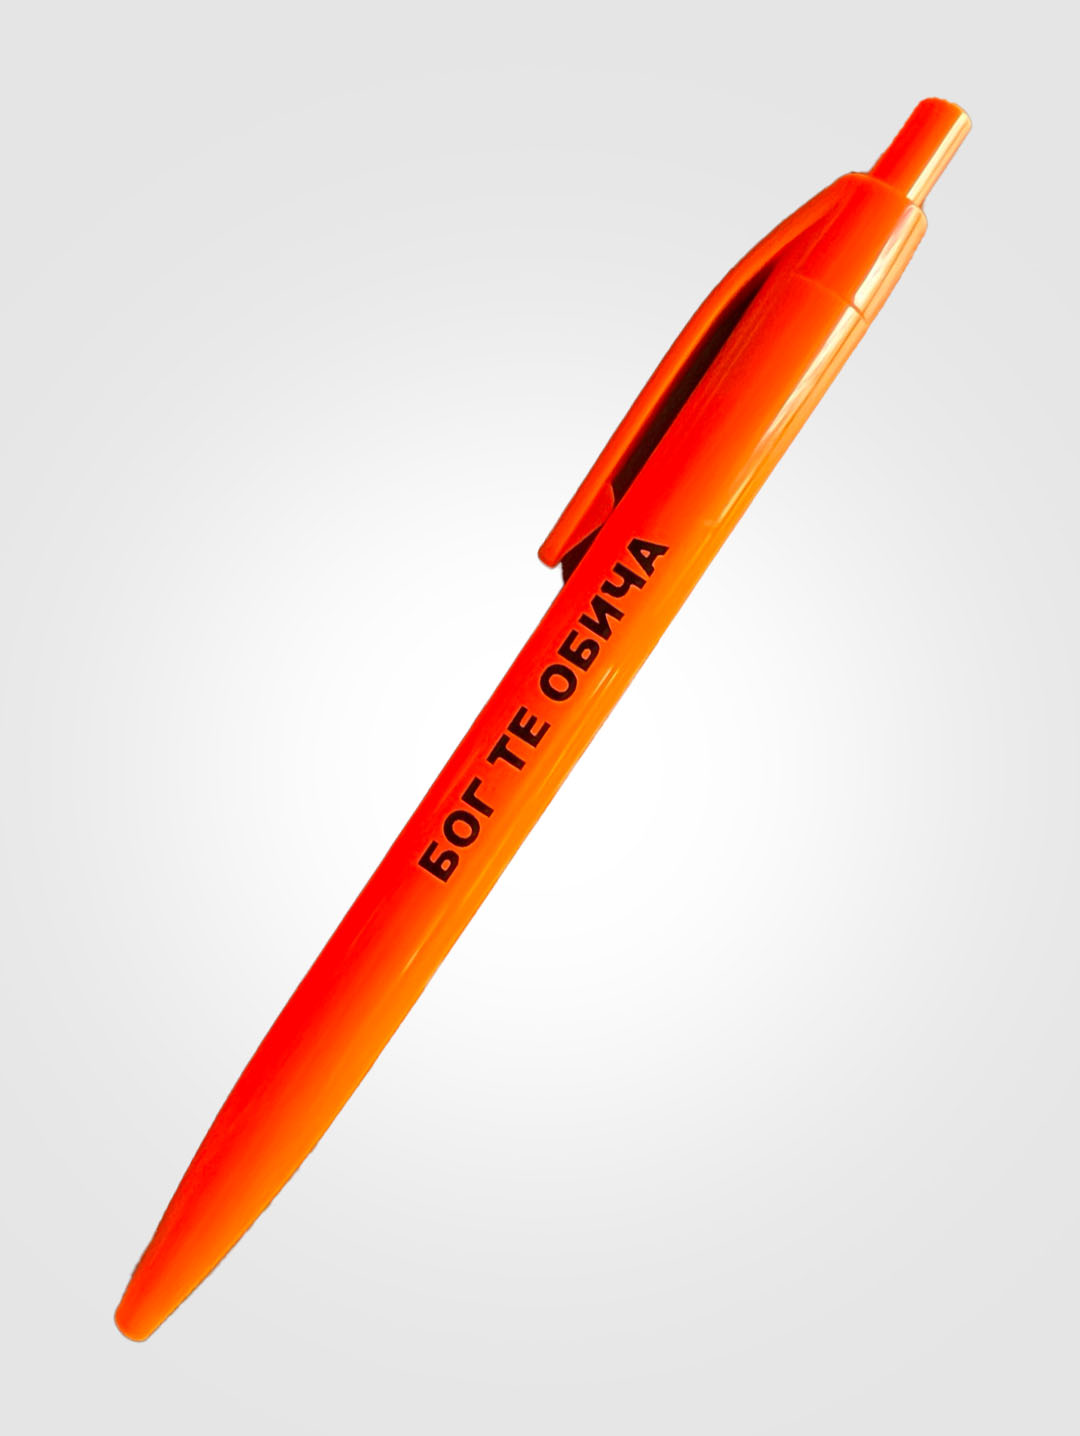 Пластмасова химикалка - Бог те обича (неоново оранжево цвят)